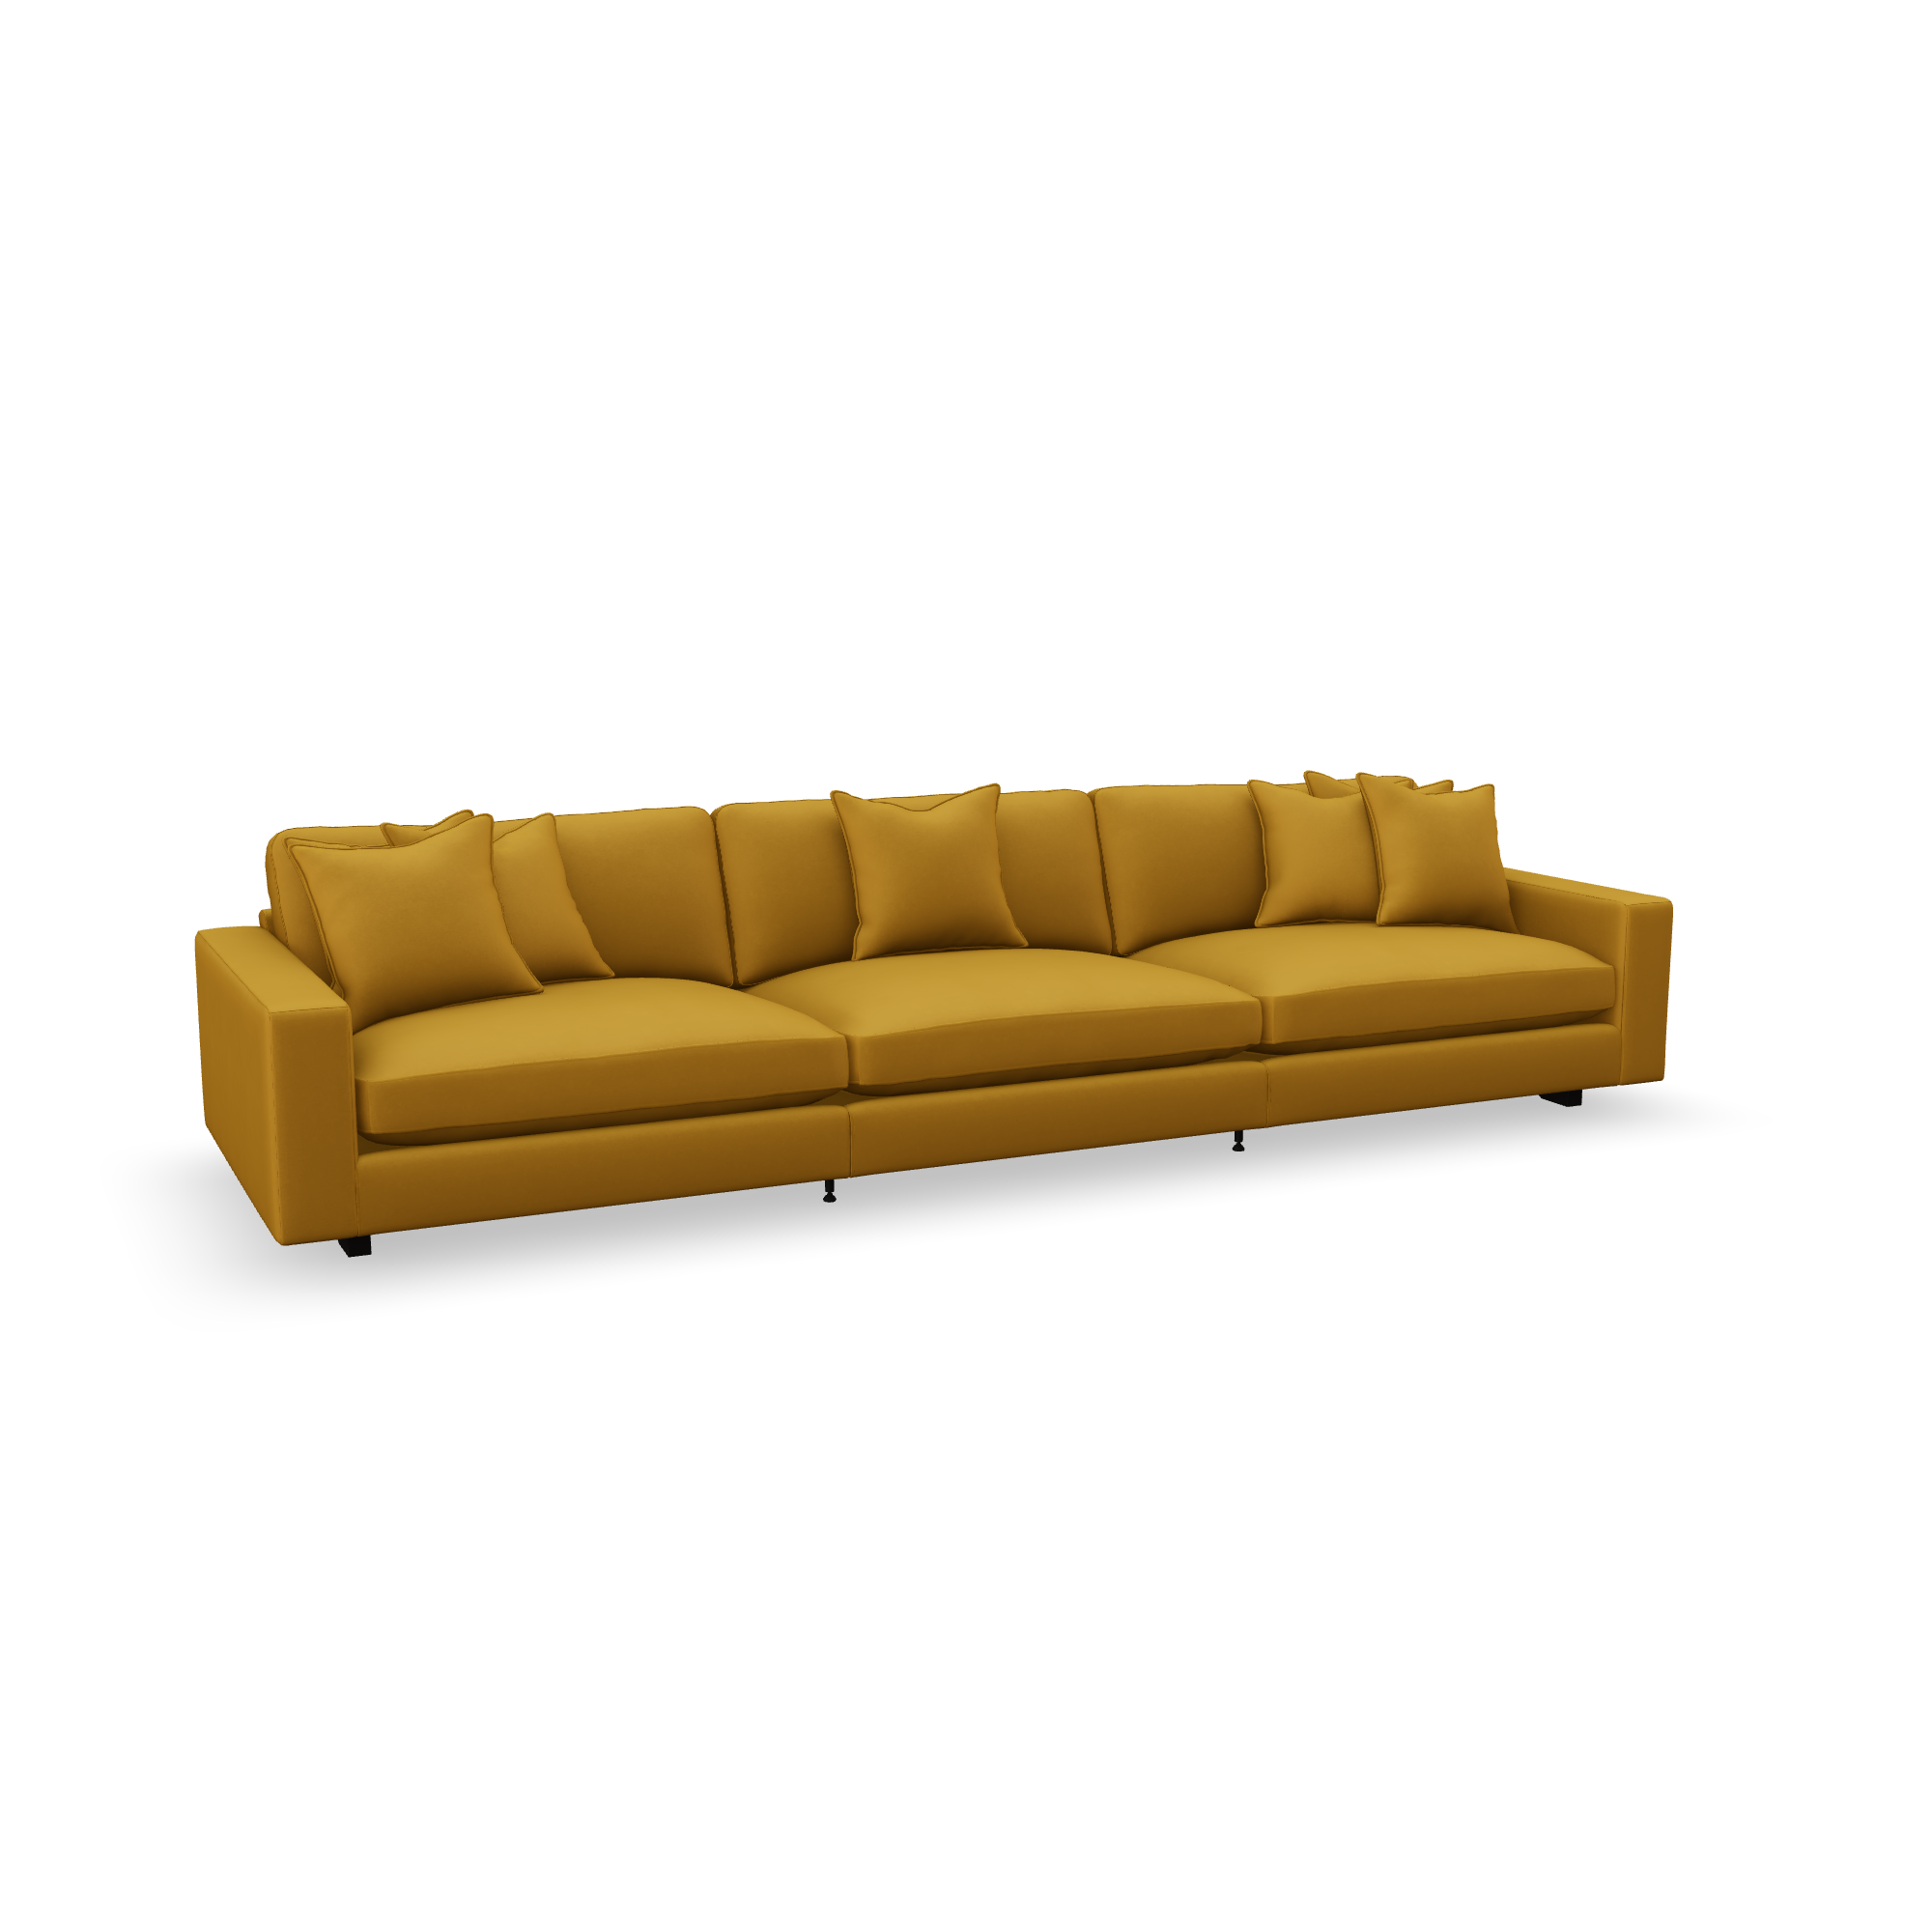 Store sofaer